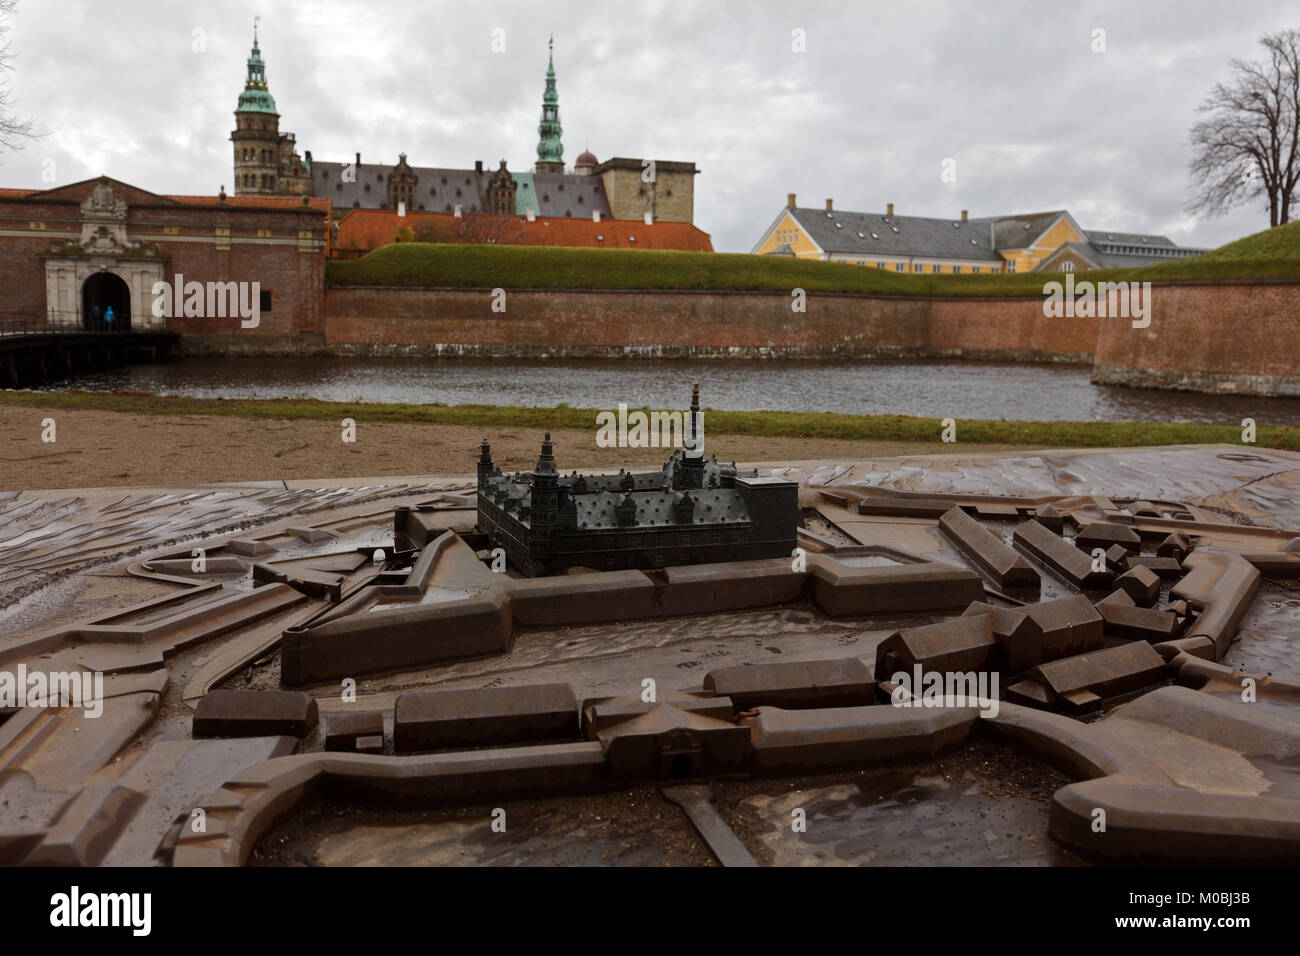 Helsingor, Denmark - November 6, 2016: 3D model of Kronborg castle against its fortified walls. Since 2000, the castle is listed as UNESCO World Herit Stock Photo